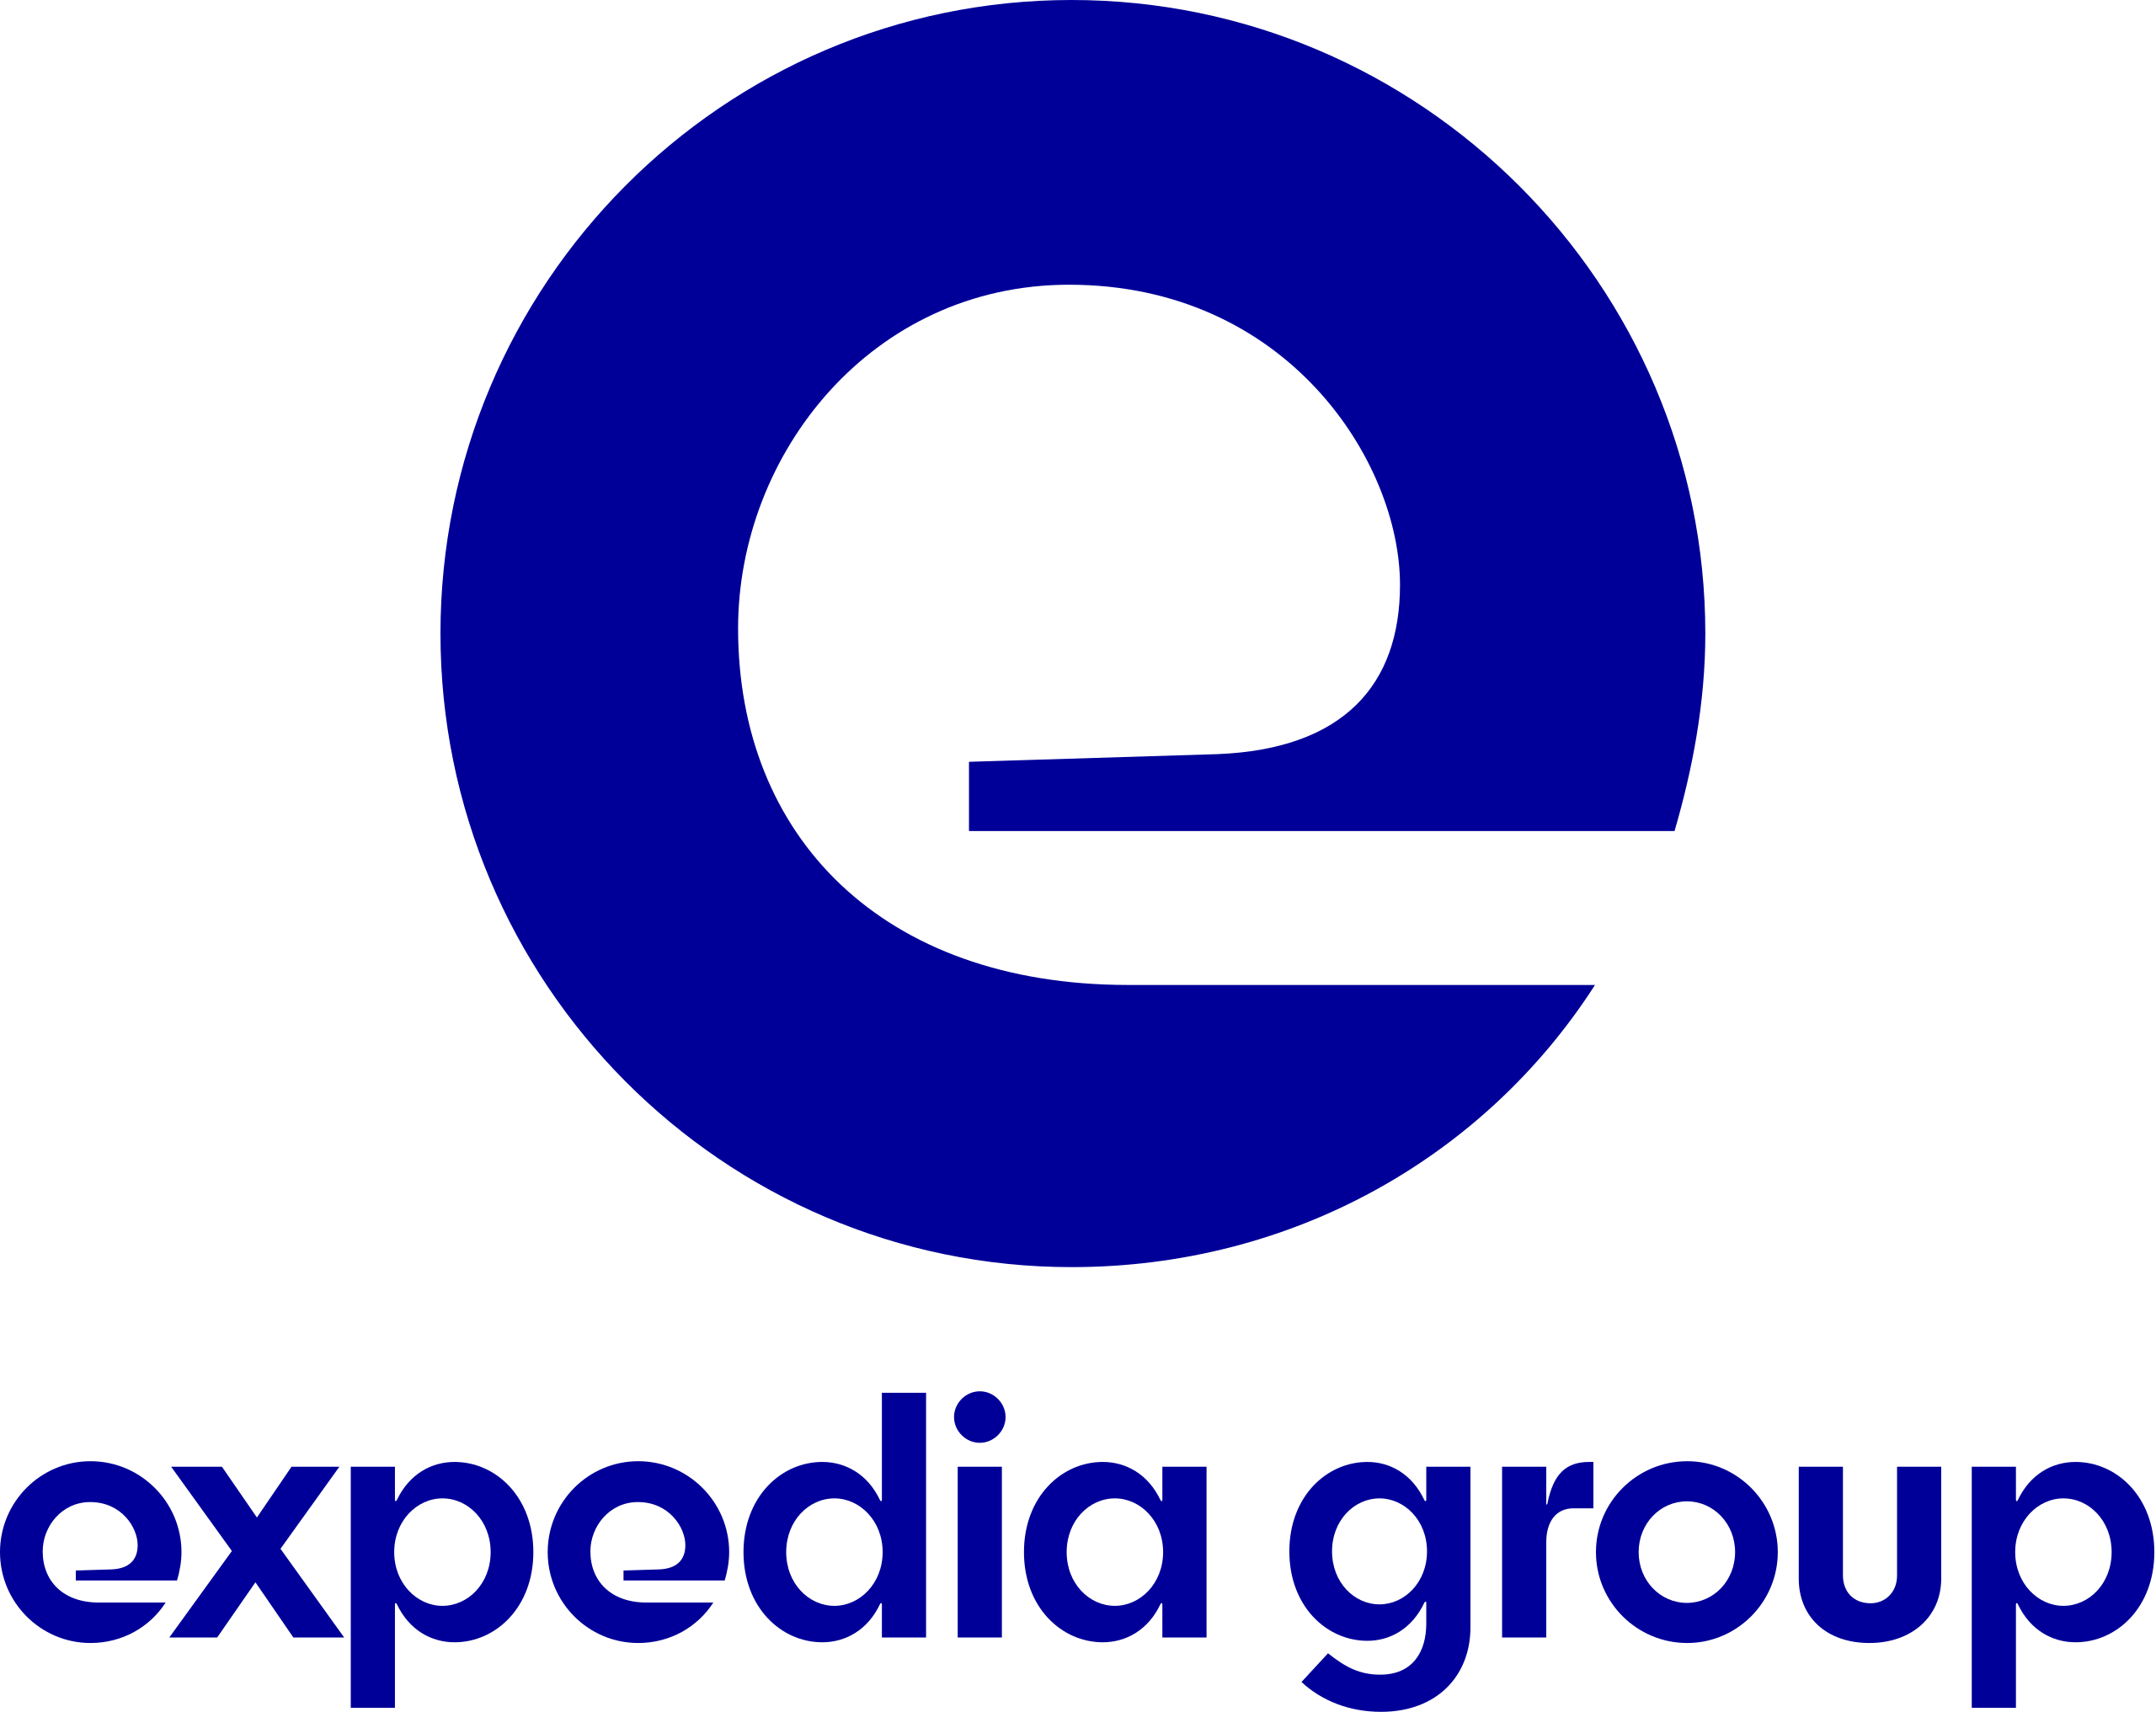 File:Expedia Group logo.svg - Wikipedia